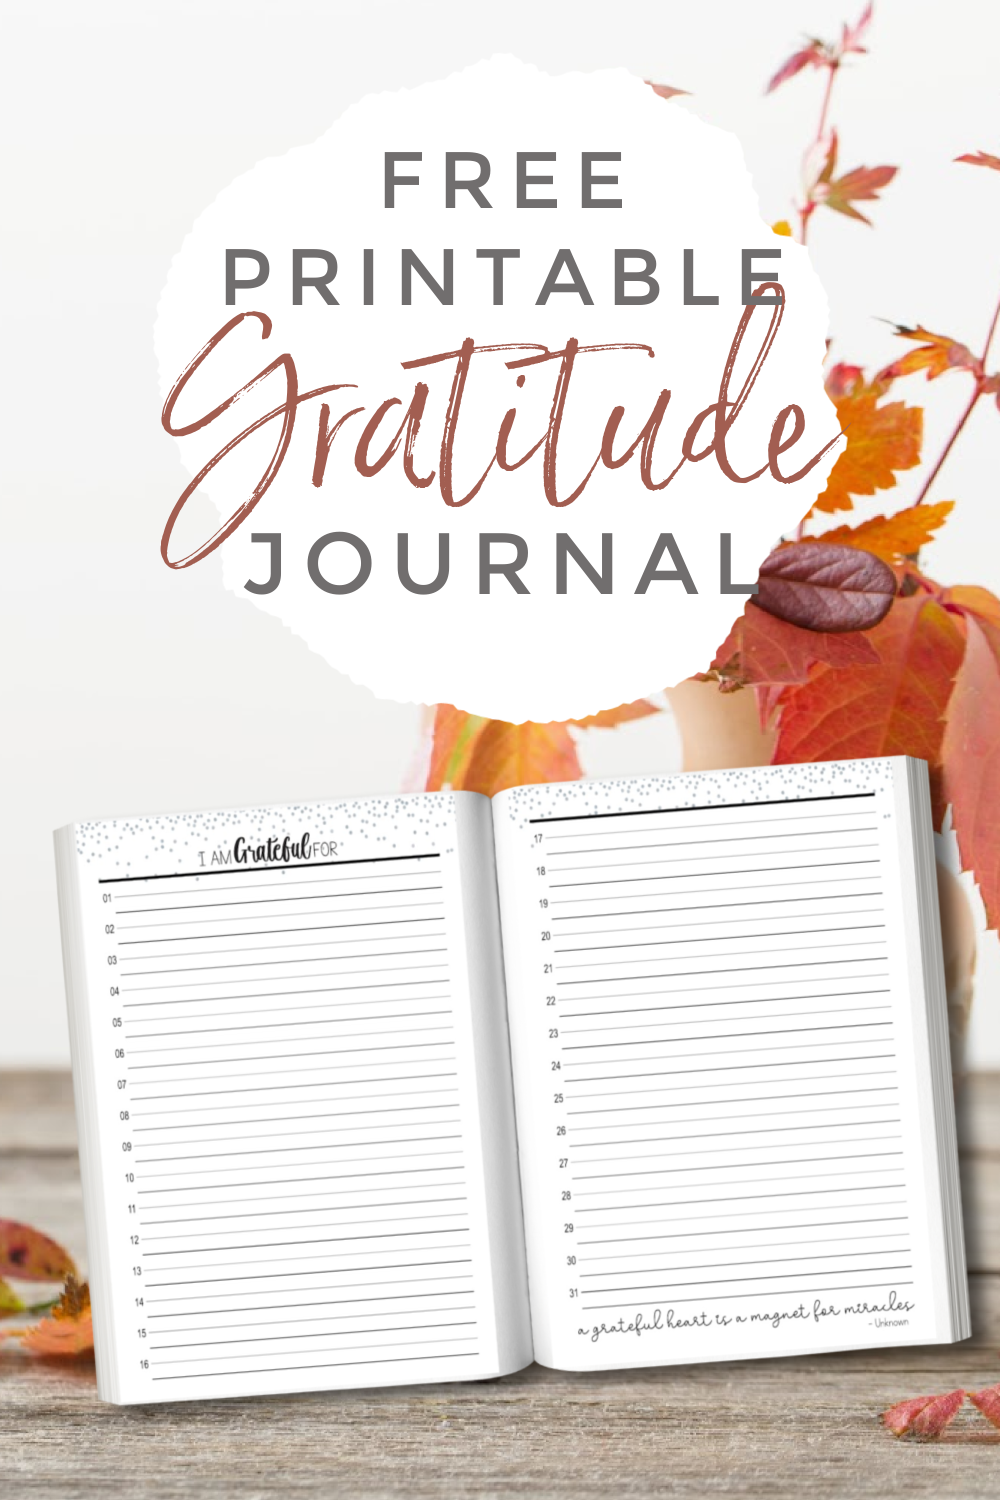 Gratitude Journal Free Printable